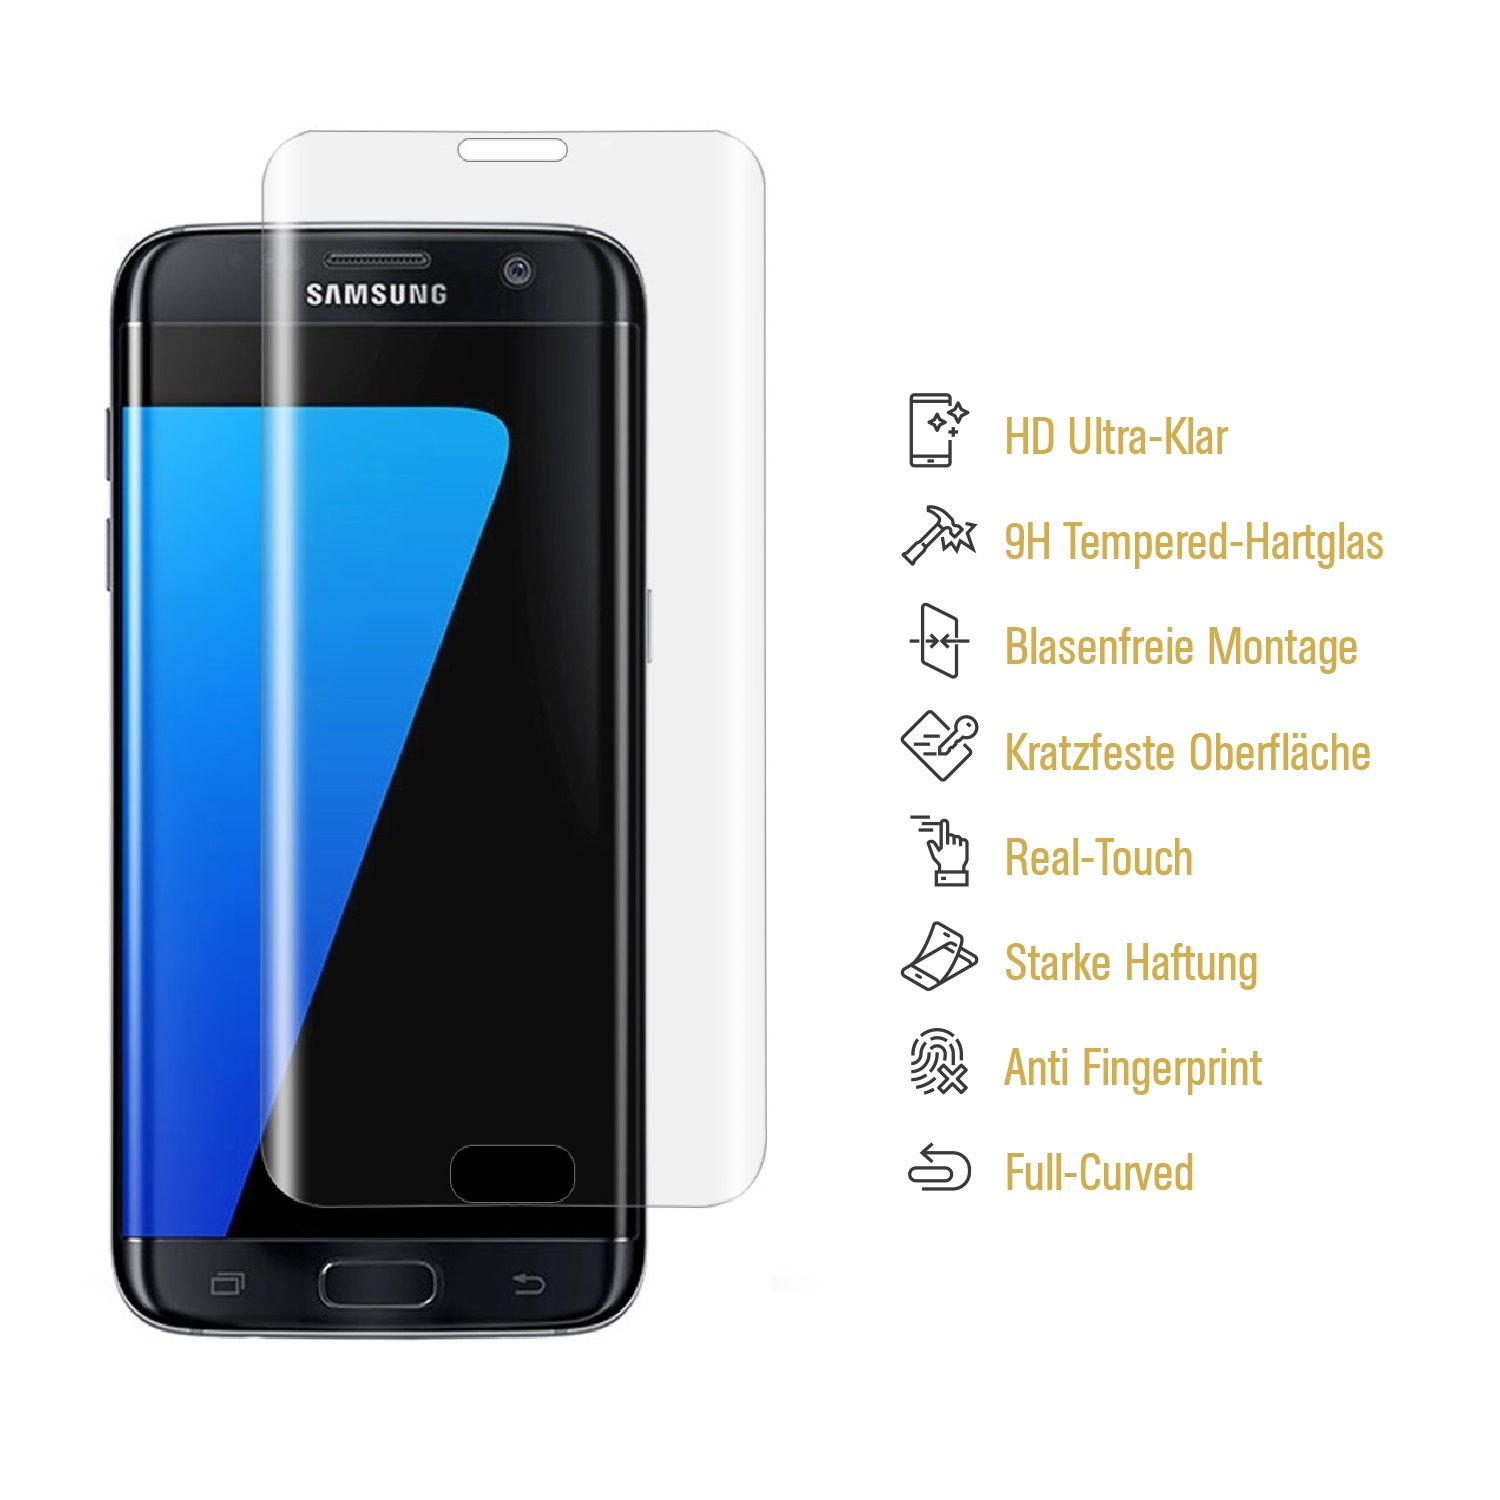 PROTECTORKING 2x FULL CURVED HD-Klar Galaxy Samsung Displayschutzfolie(für S7) 9H Hartglas